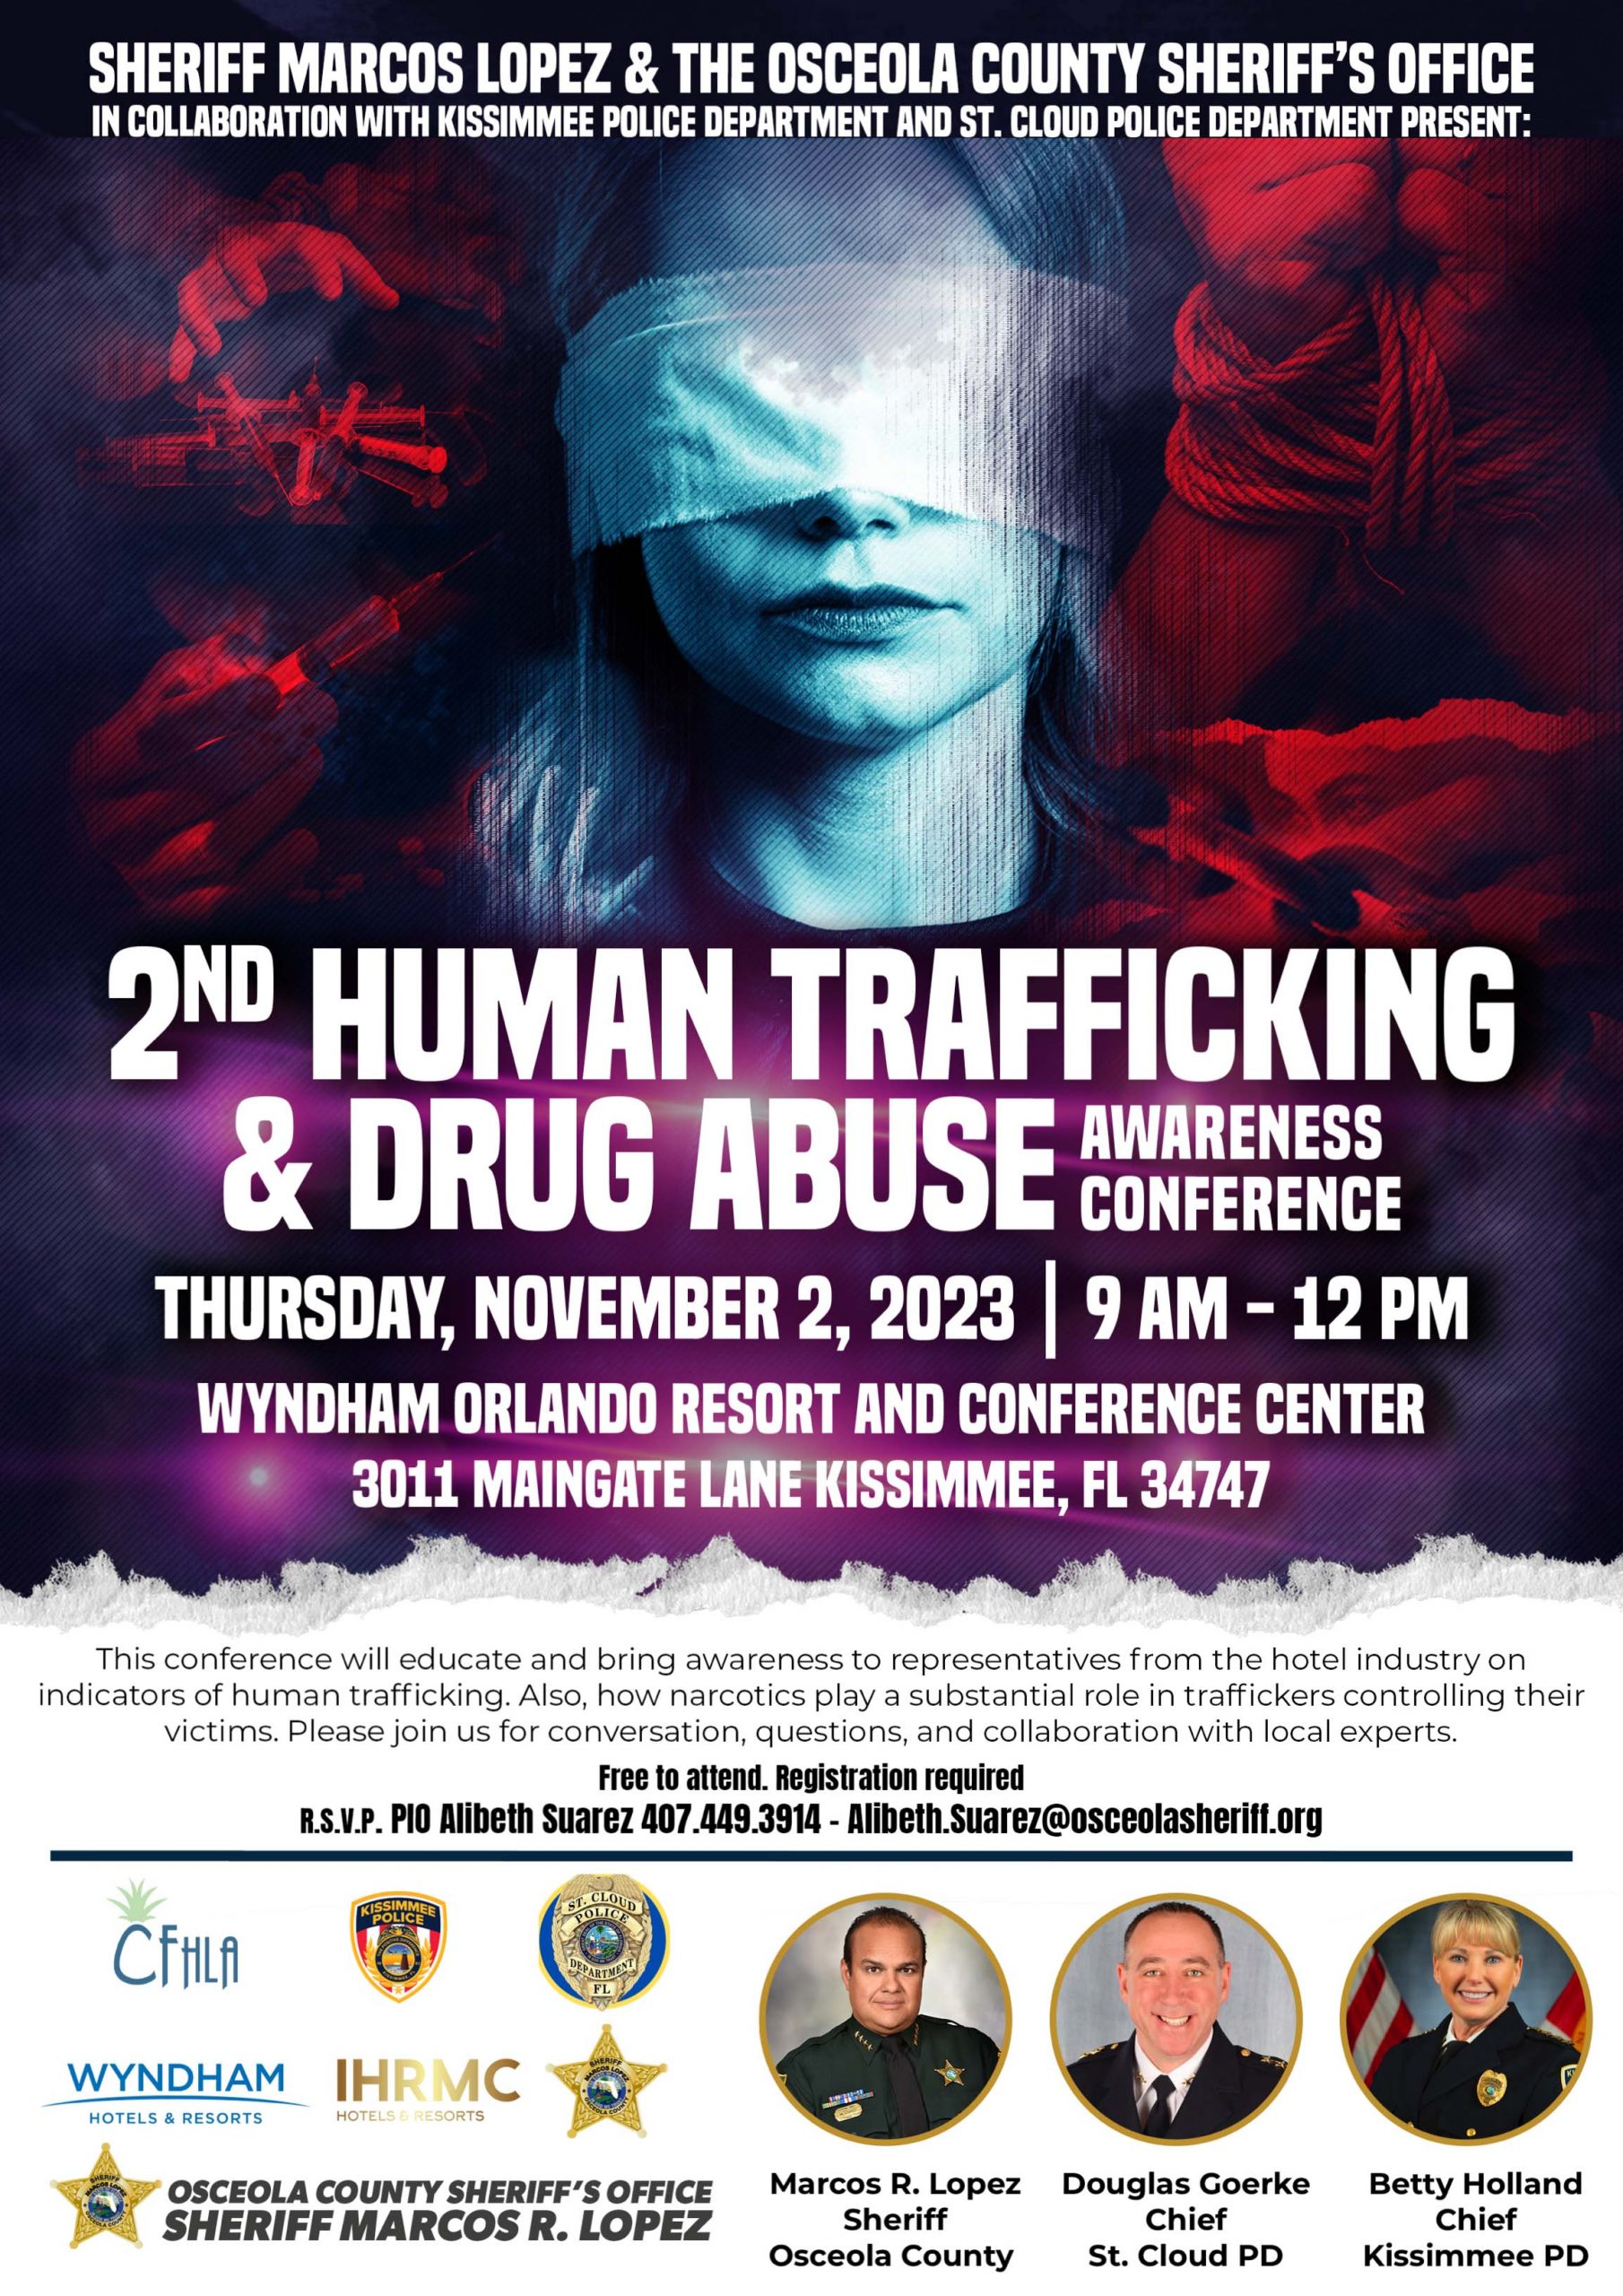 2nd Human Trafficking & Drug Abuse Awareness Conference